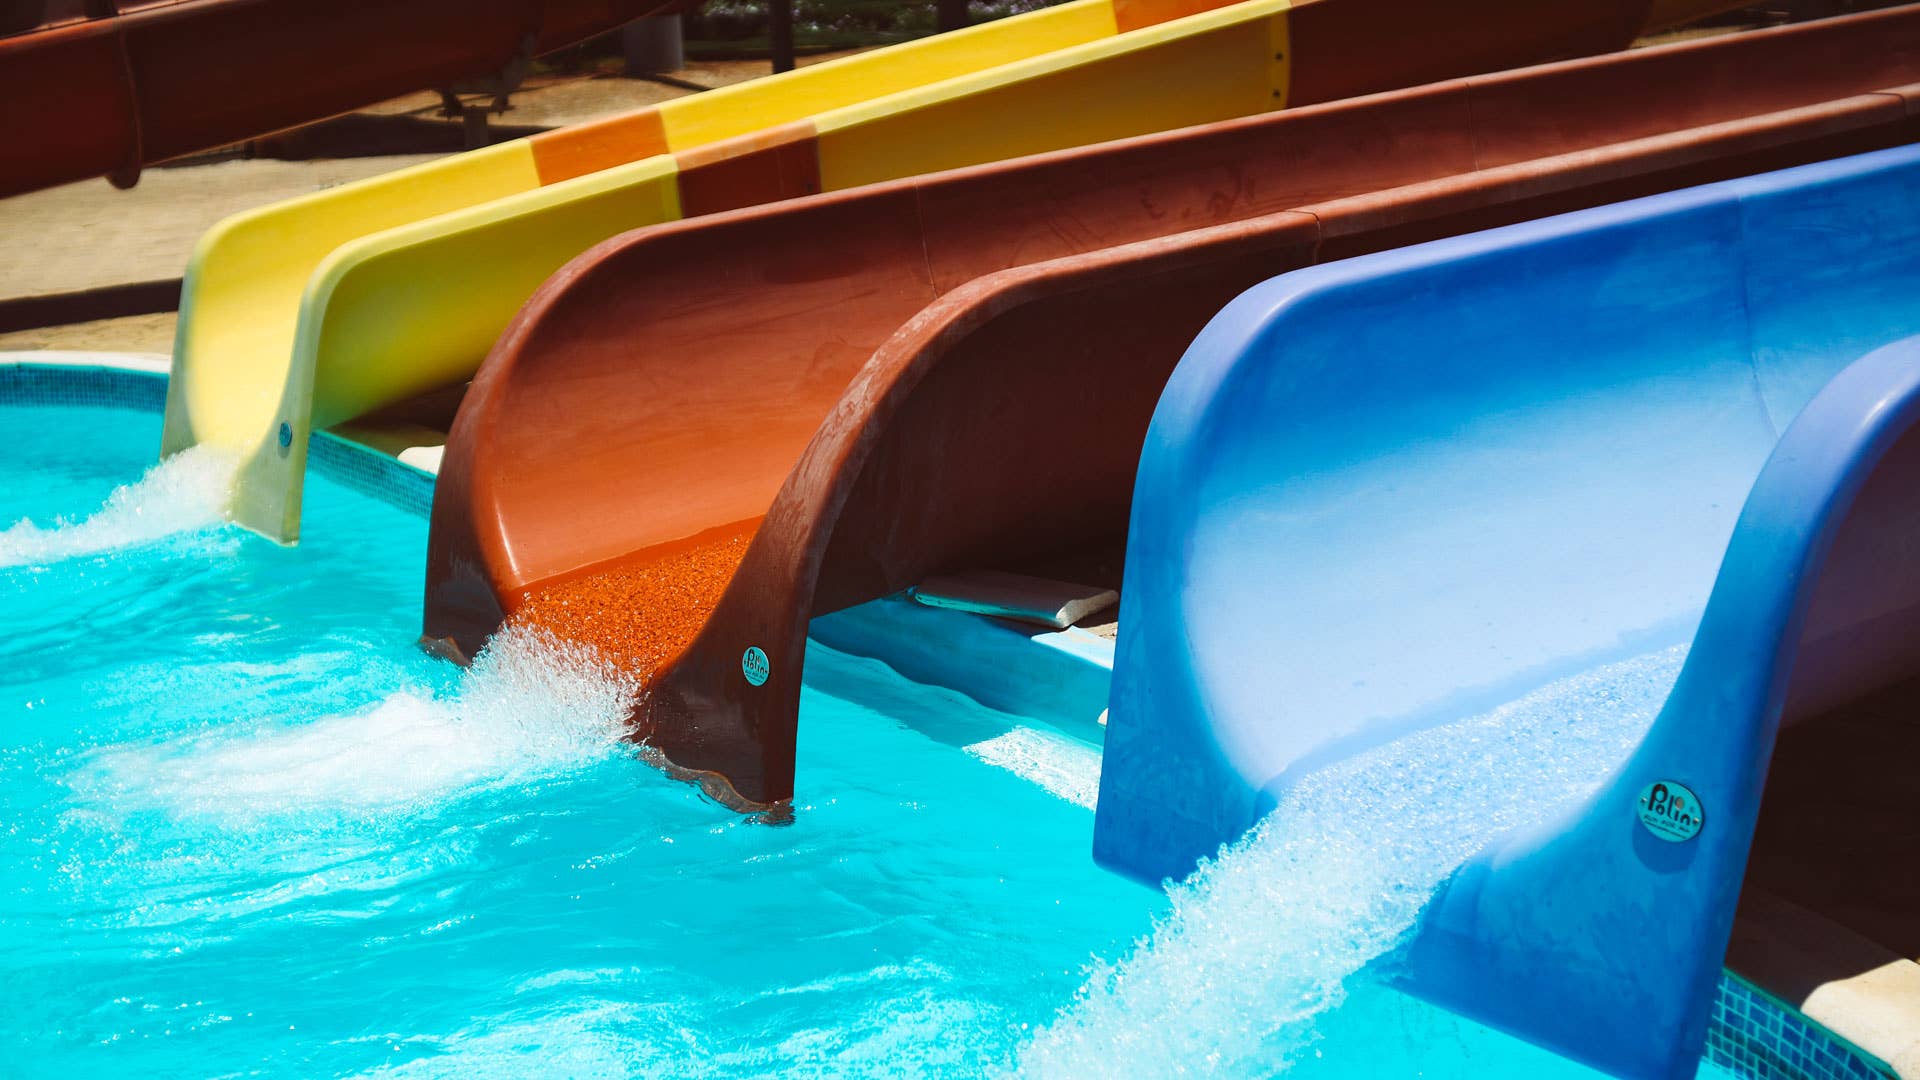 Slides at water park